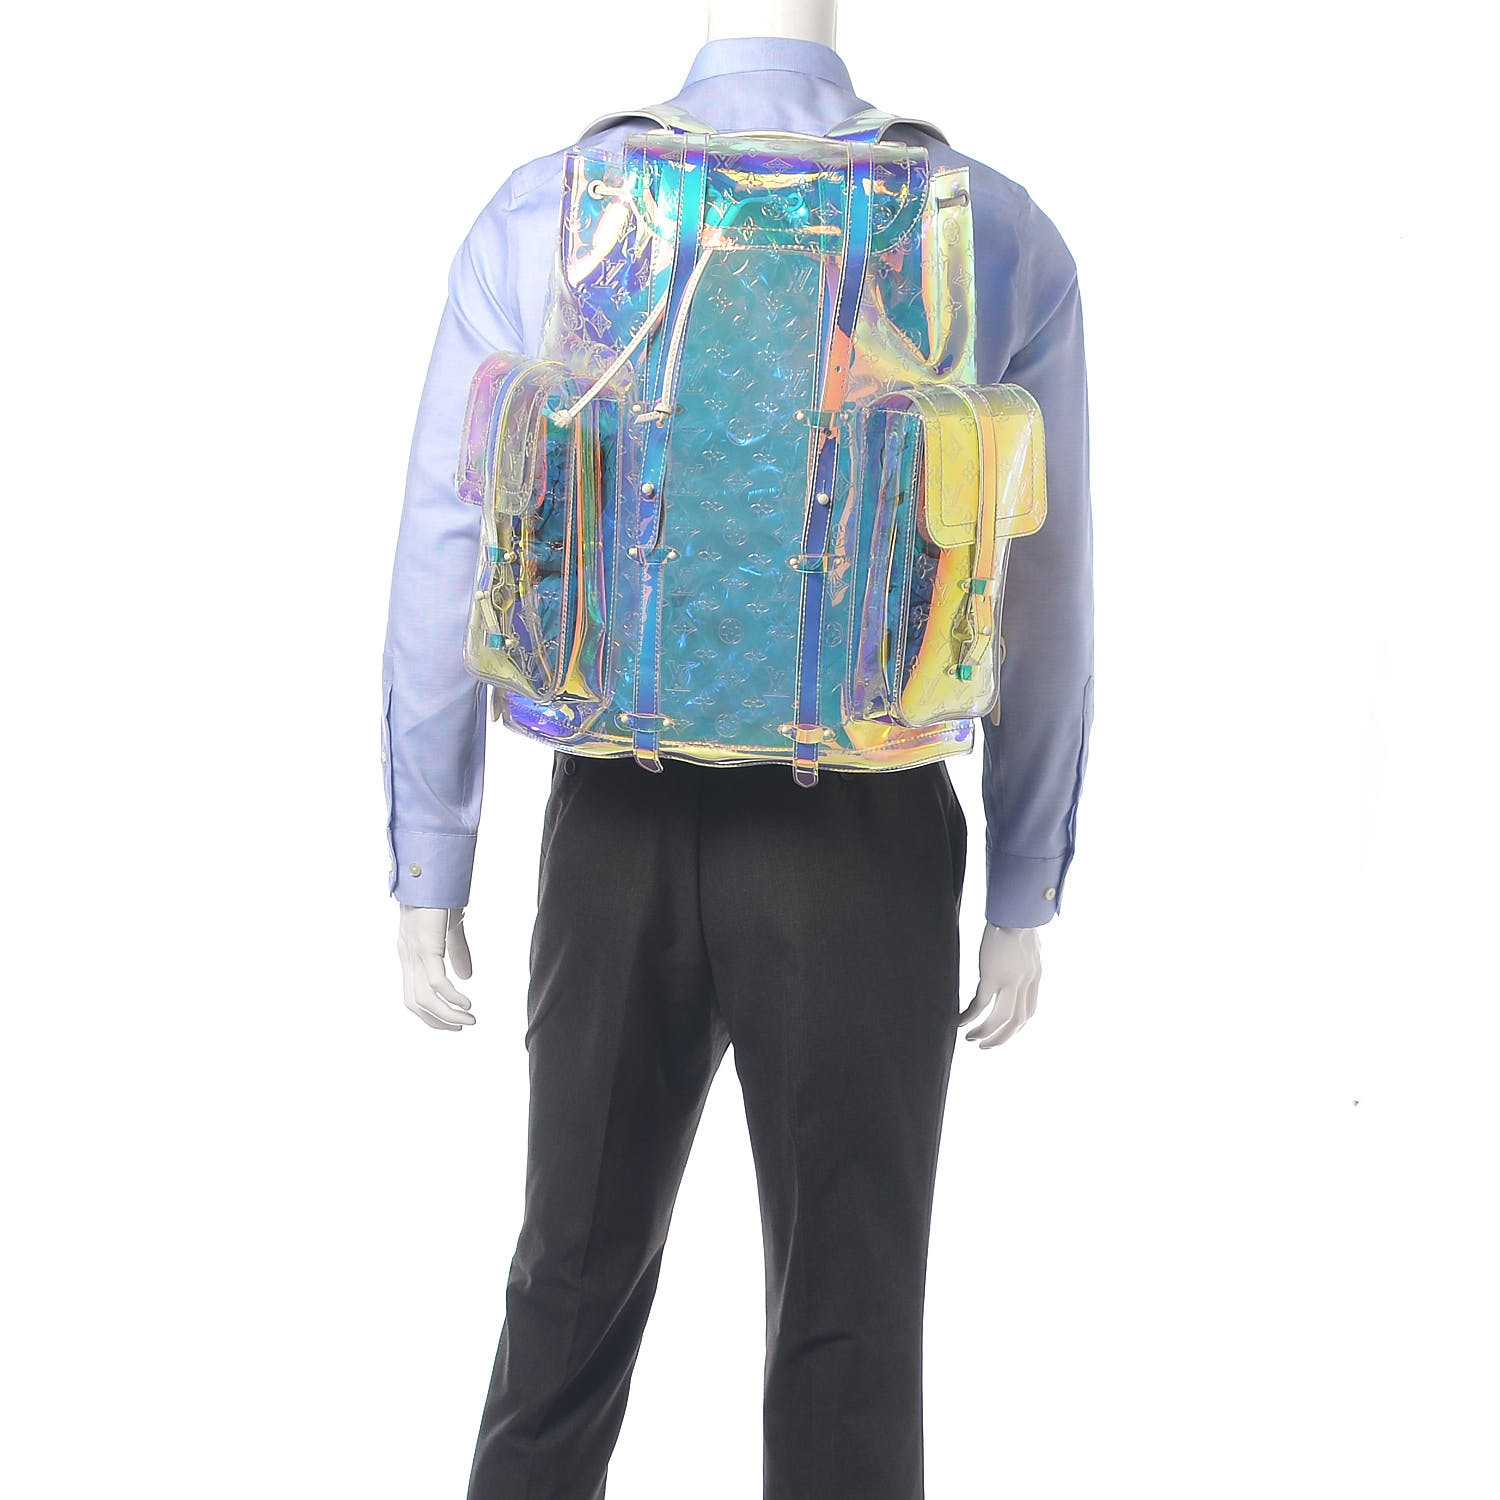 Louis Vuitton Christopher Prism Backpack Iridescent Virgil Abloh